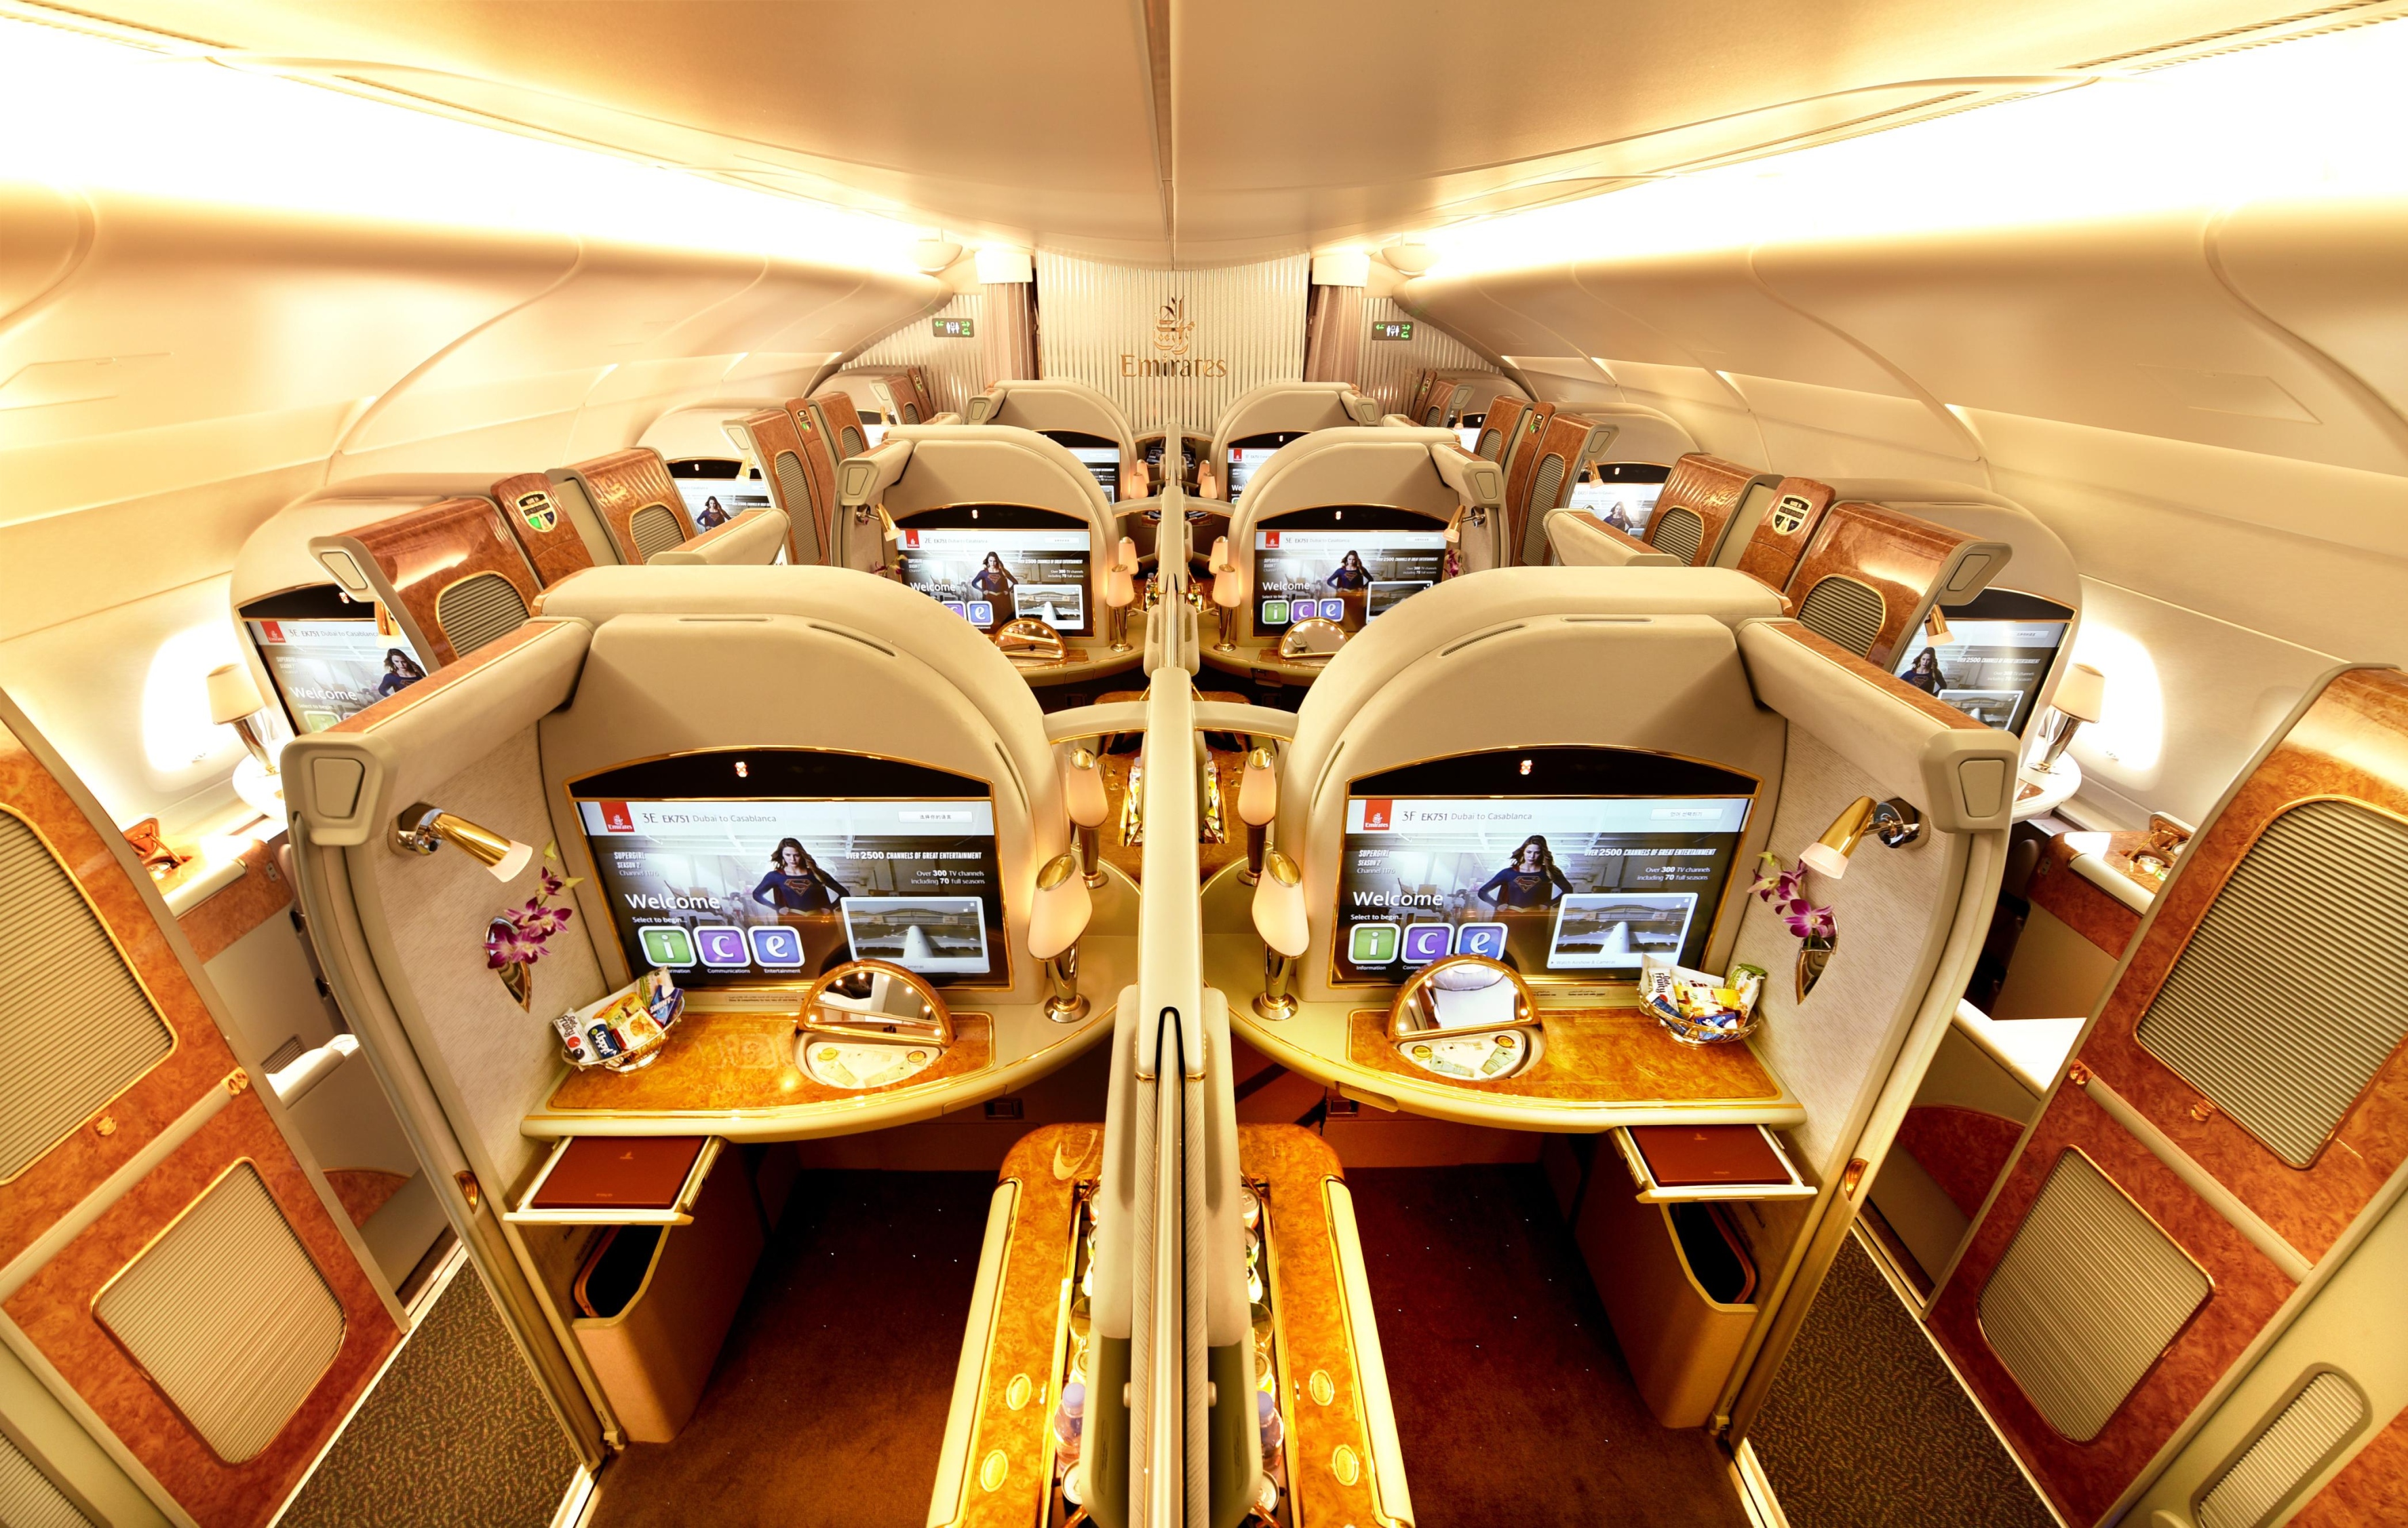 First class отзывы. Самолет Emirates a380 салон. Аэробус а380 Emirates. Самолёт Аэробус а380 Эмирейтс. Аэробус а380 Эмирейтс салон.